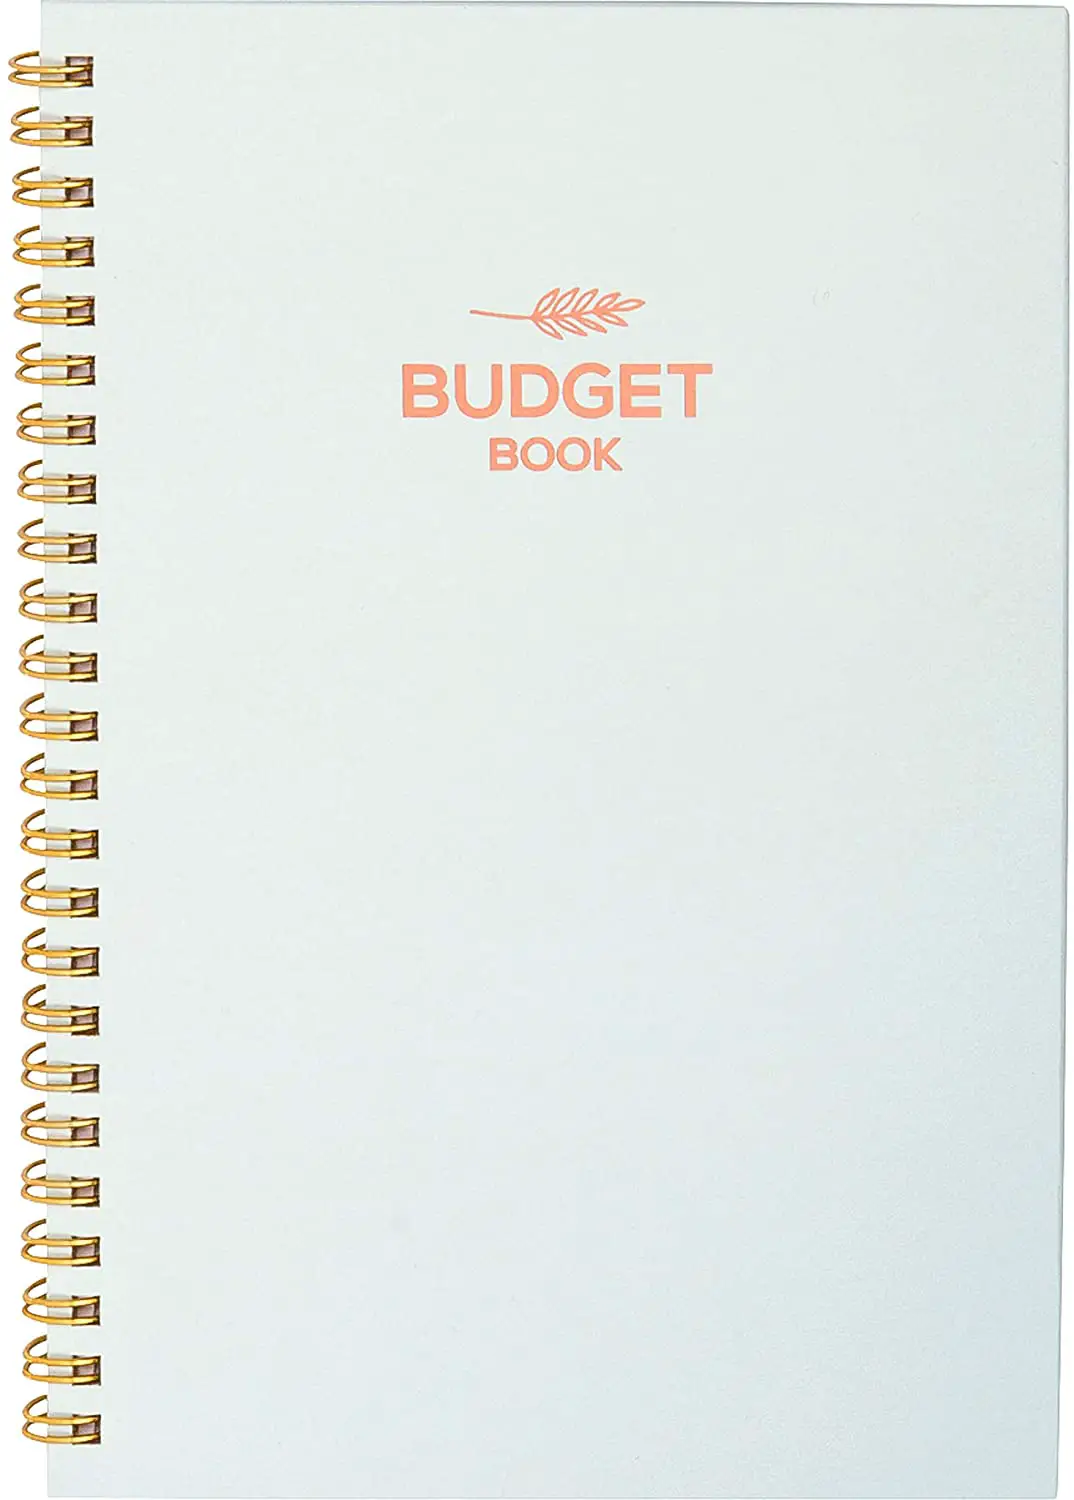 best monthly budget planner book